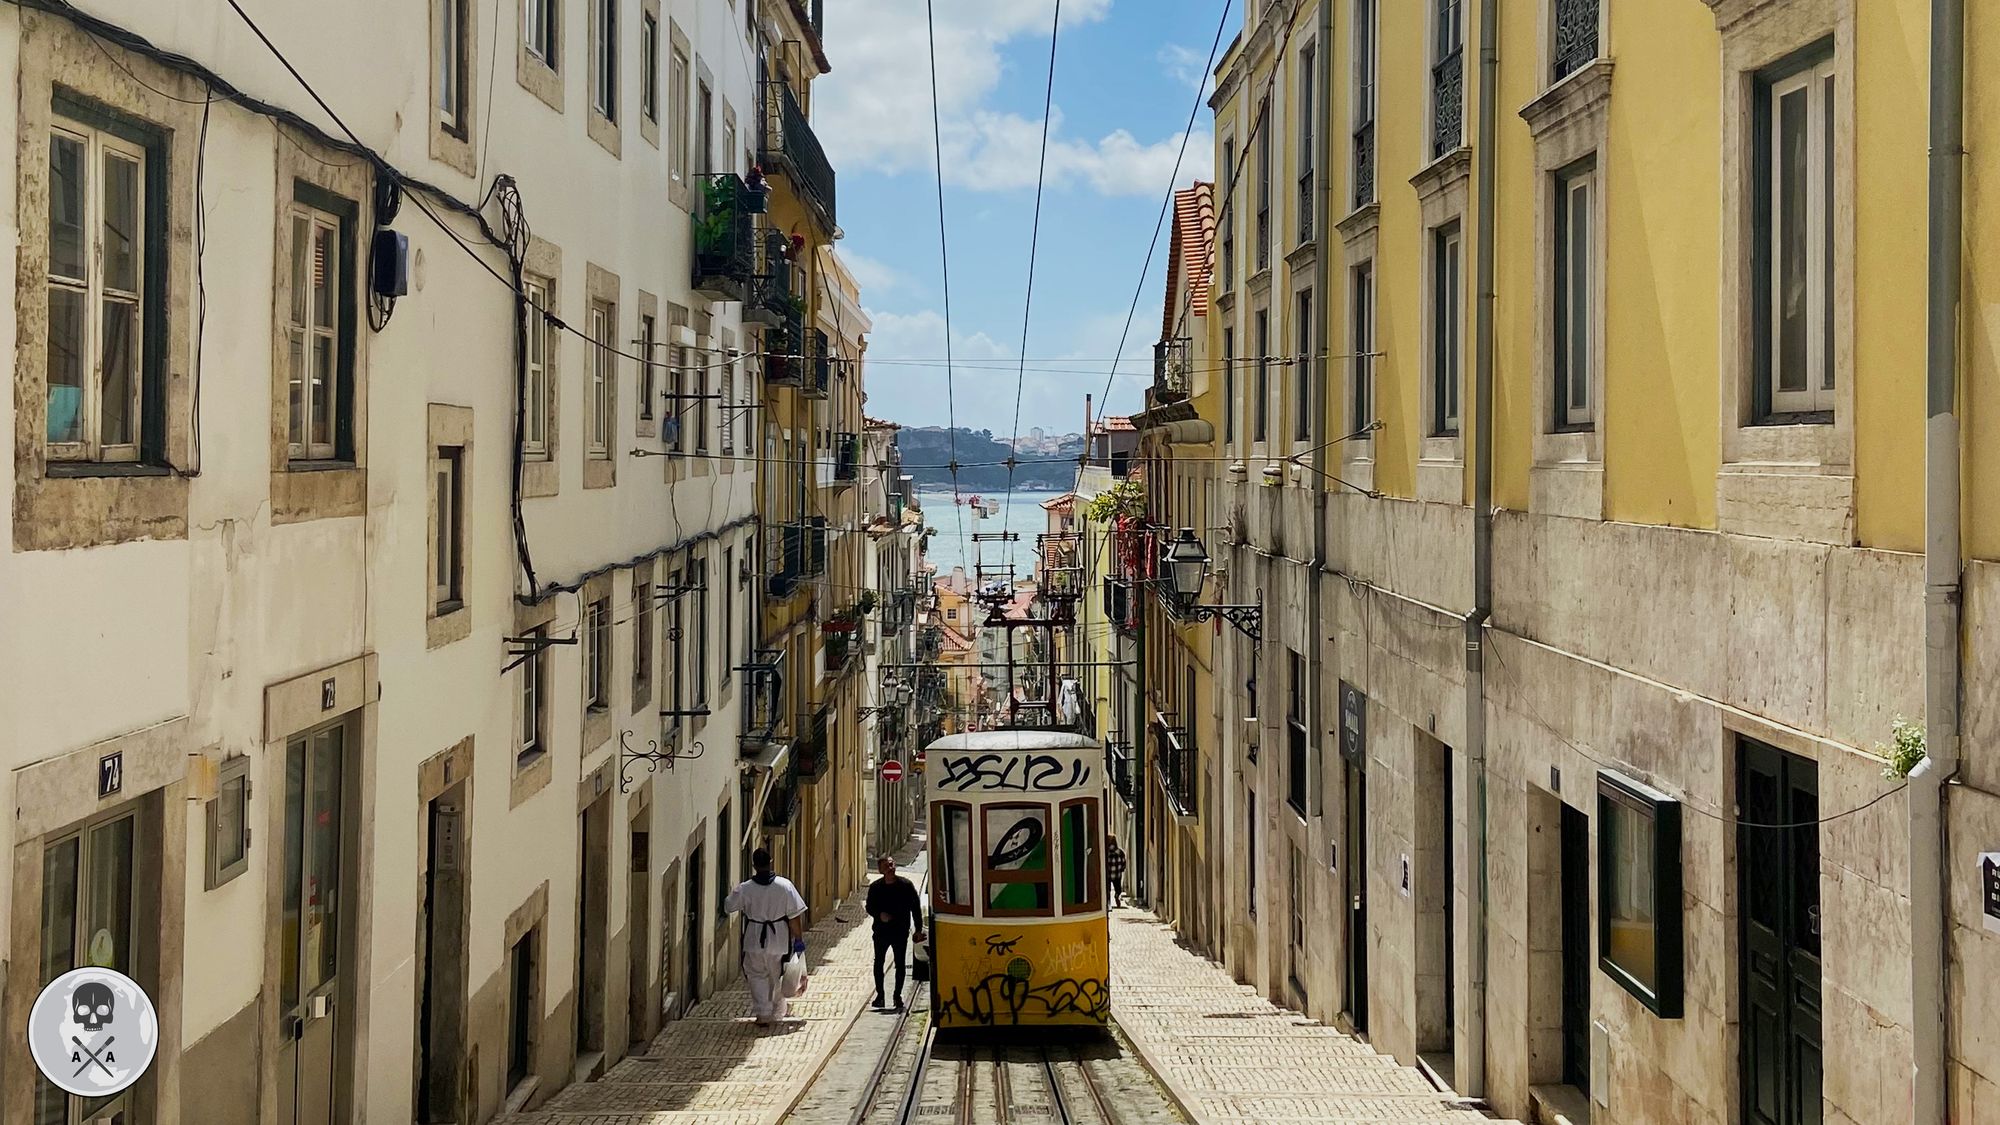 Yellow tram in a narrow street in Lisbon, Portugal